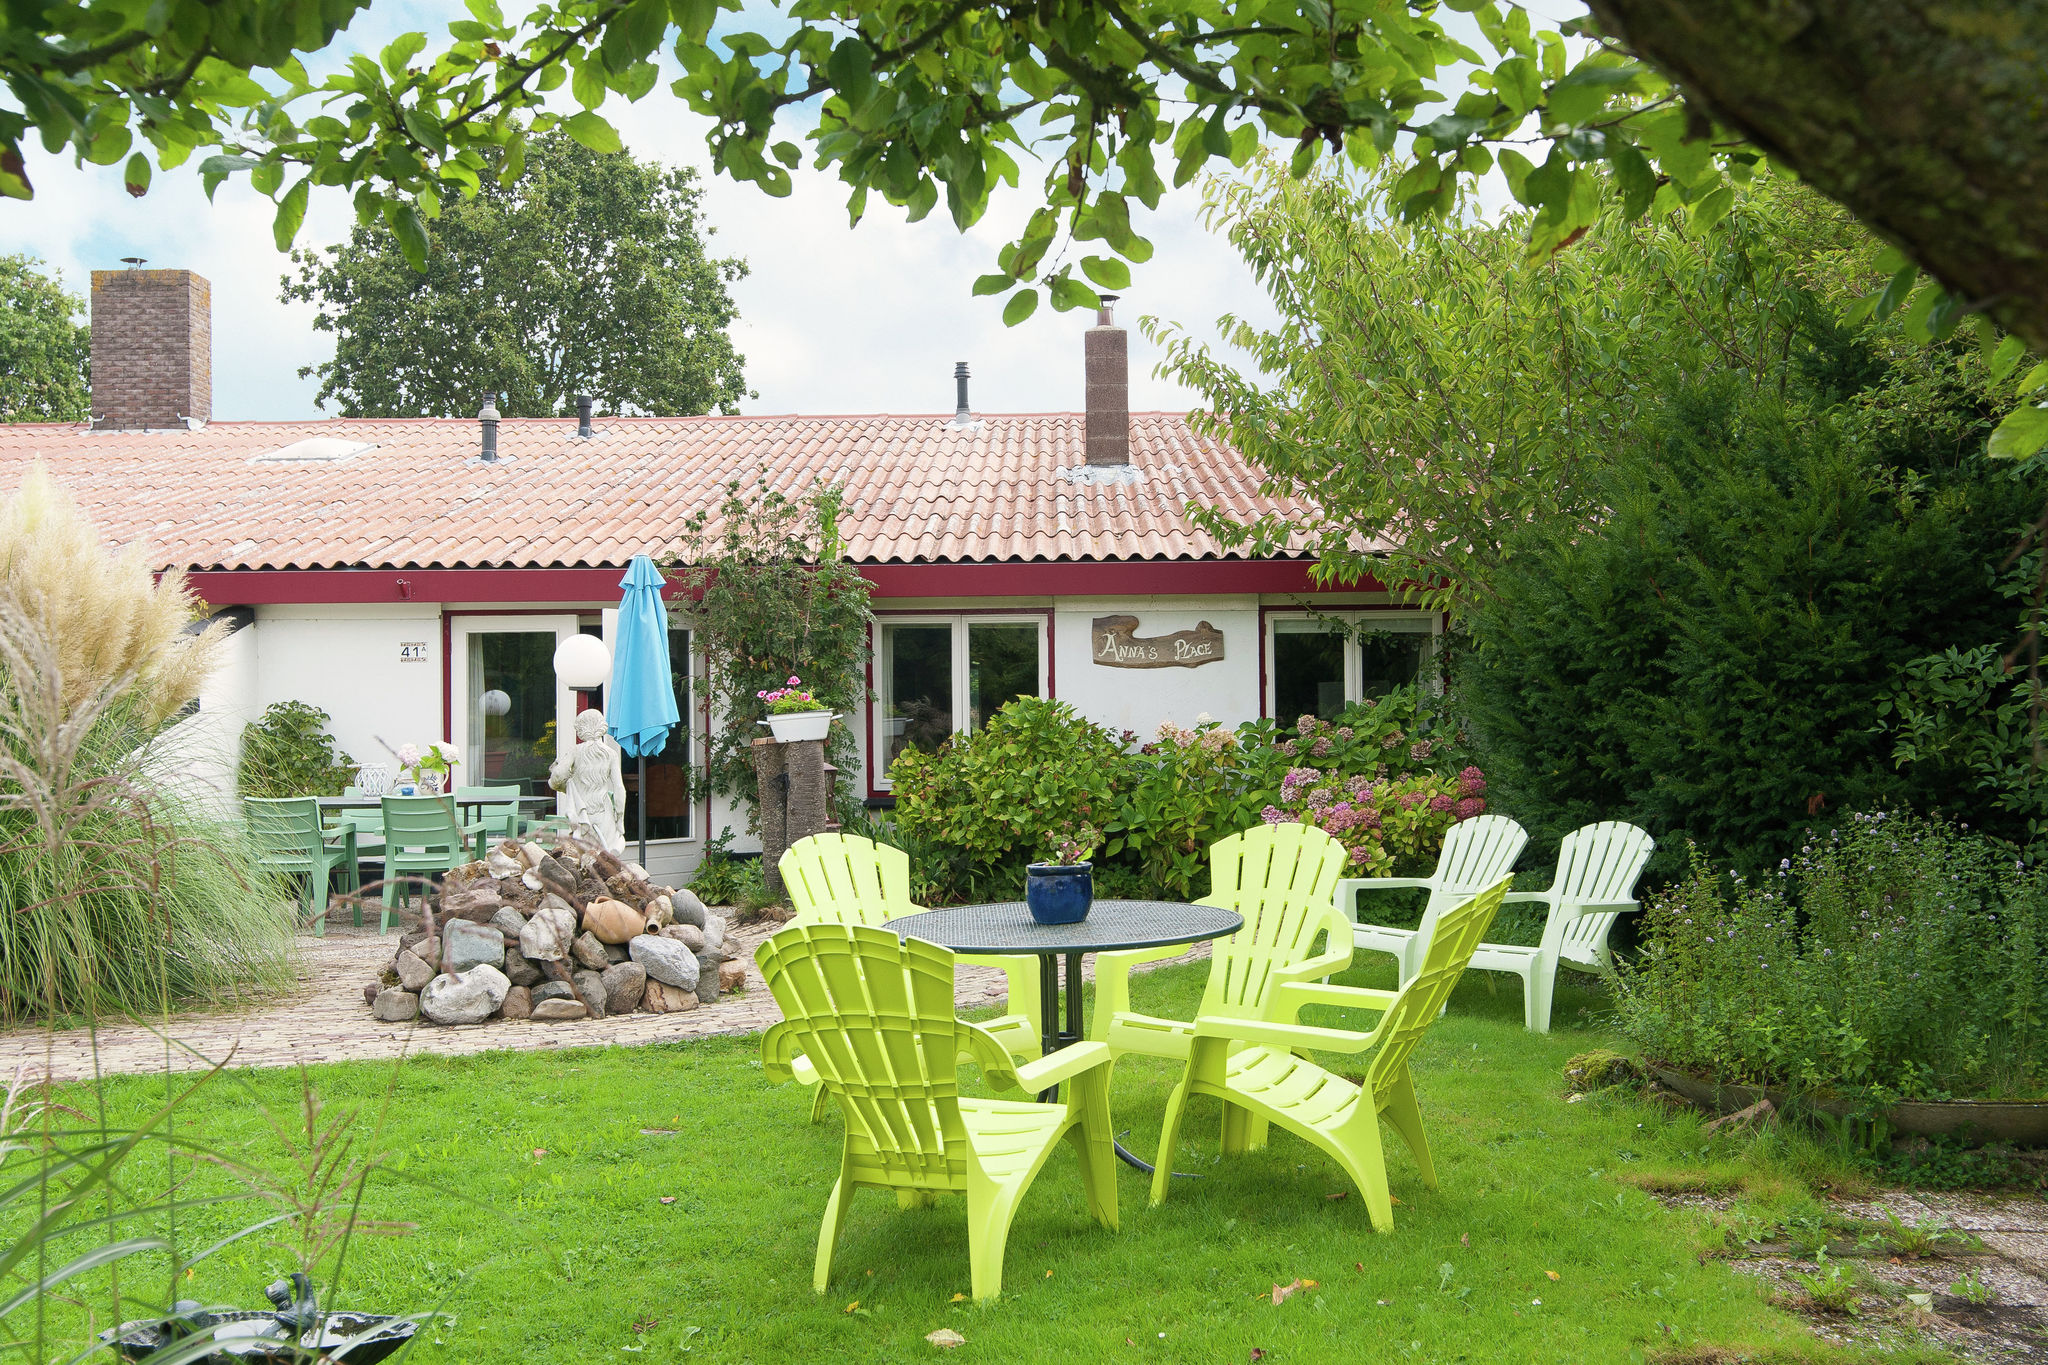 Holiday home in Schoorl with a garden